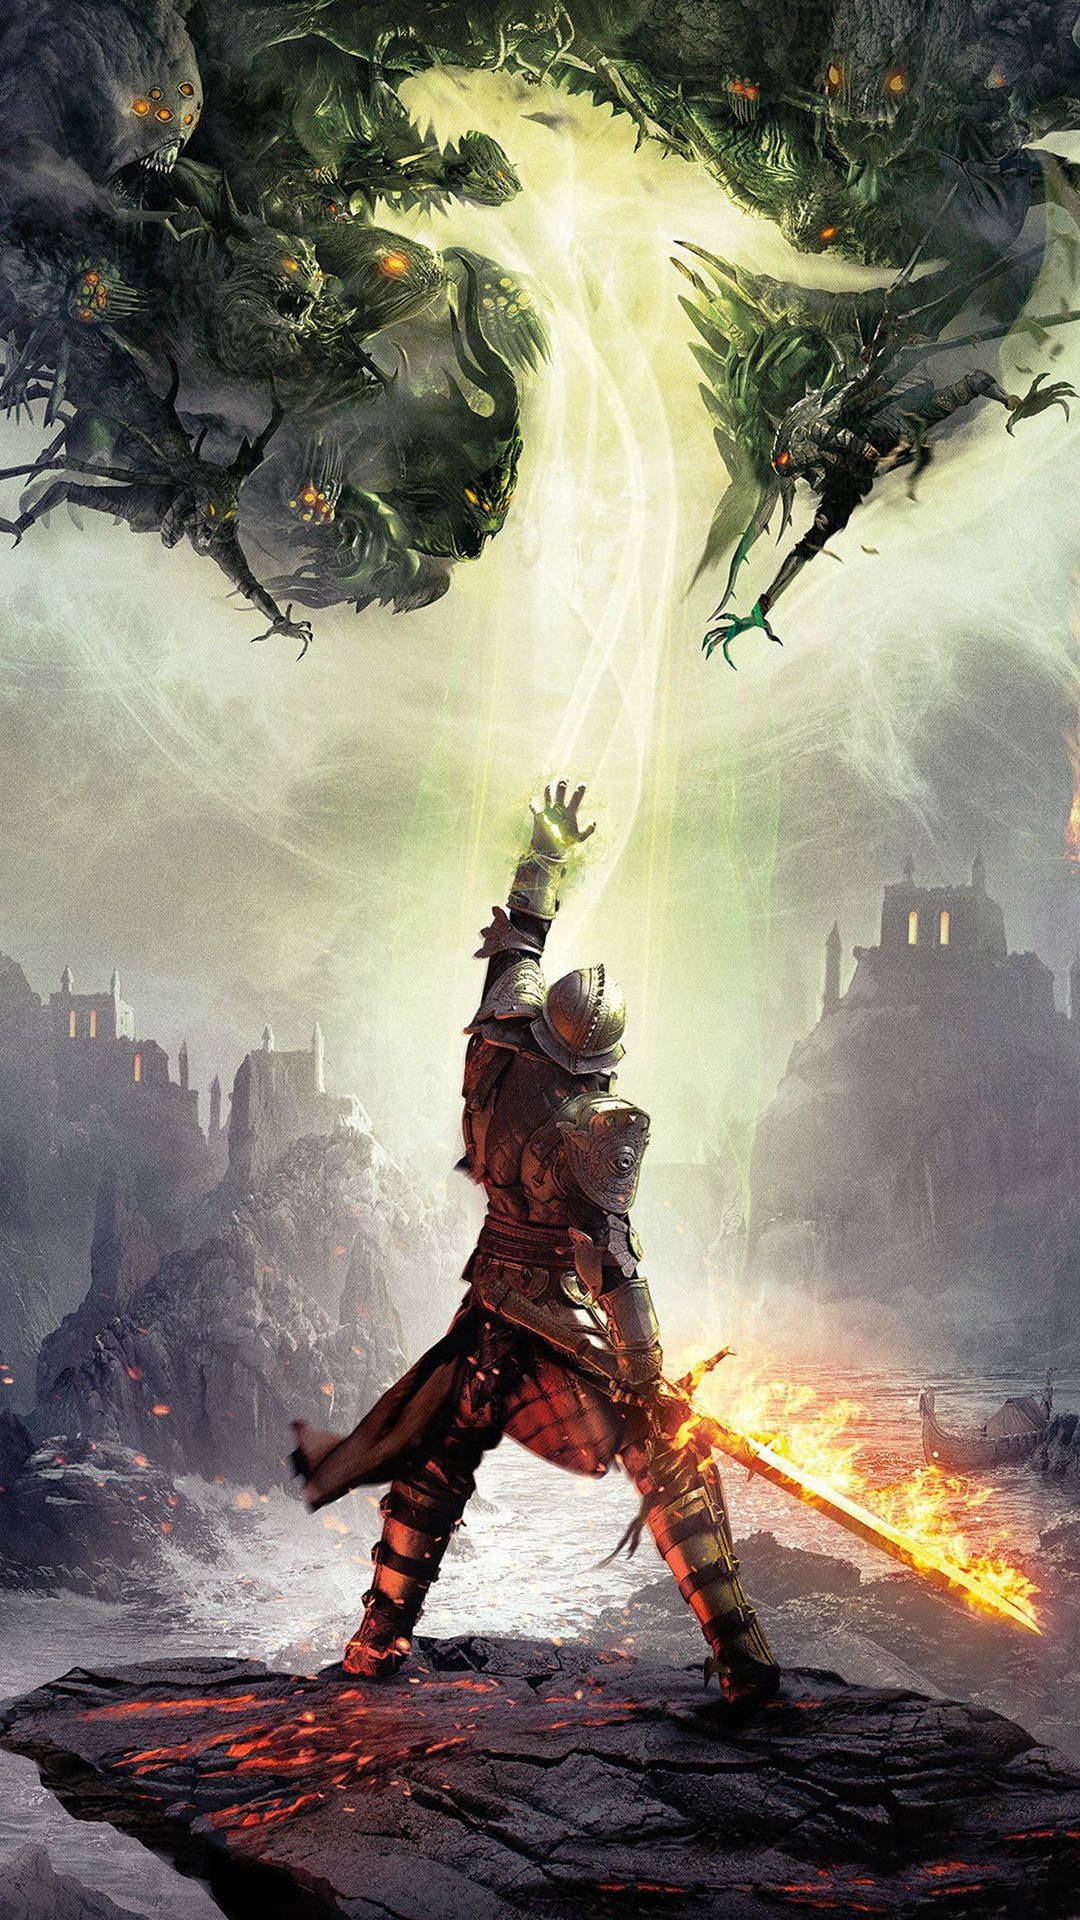 1080x1920 Dragon Age Inquisition Game Illust Art #iPhone #6 #plus #wallpaper